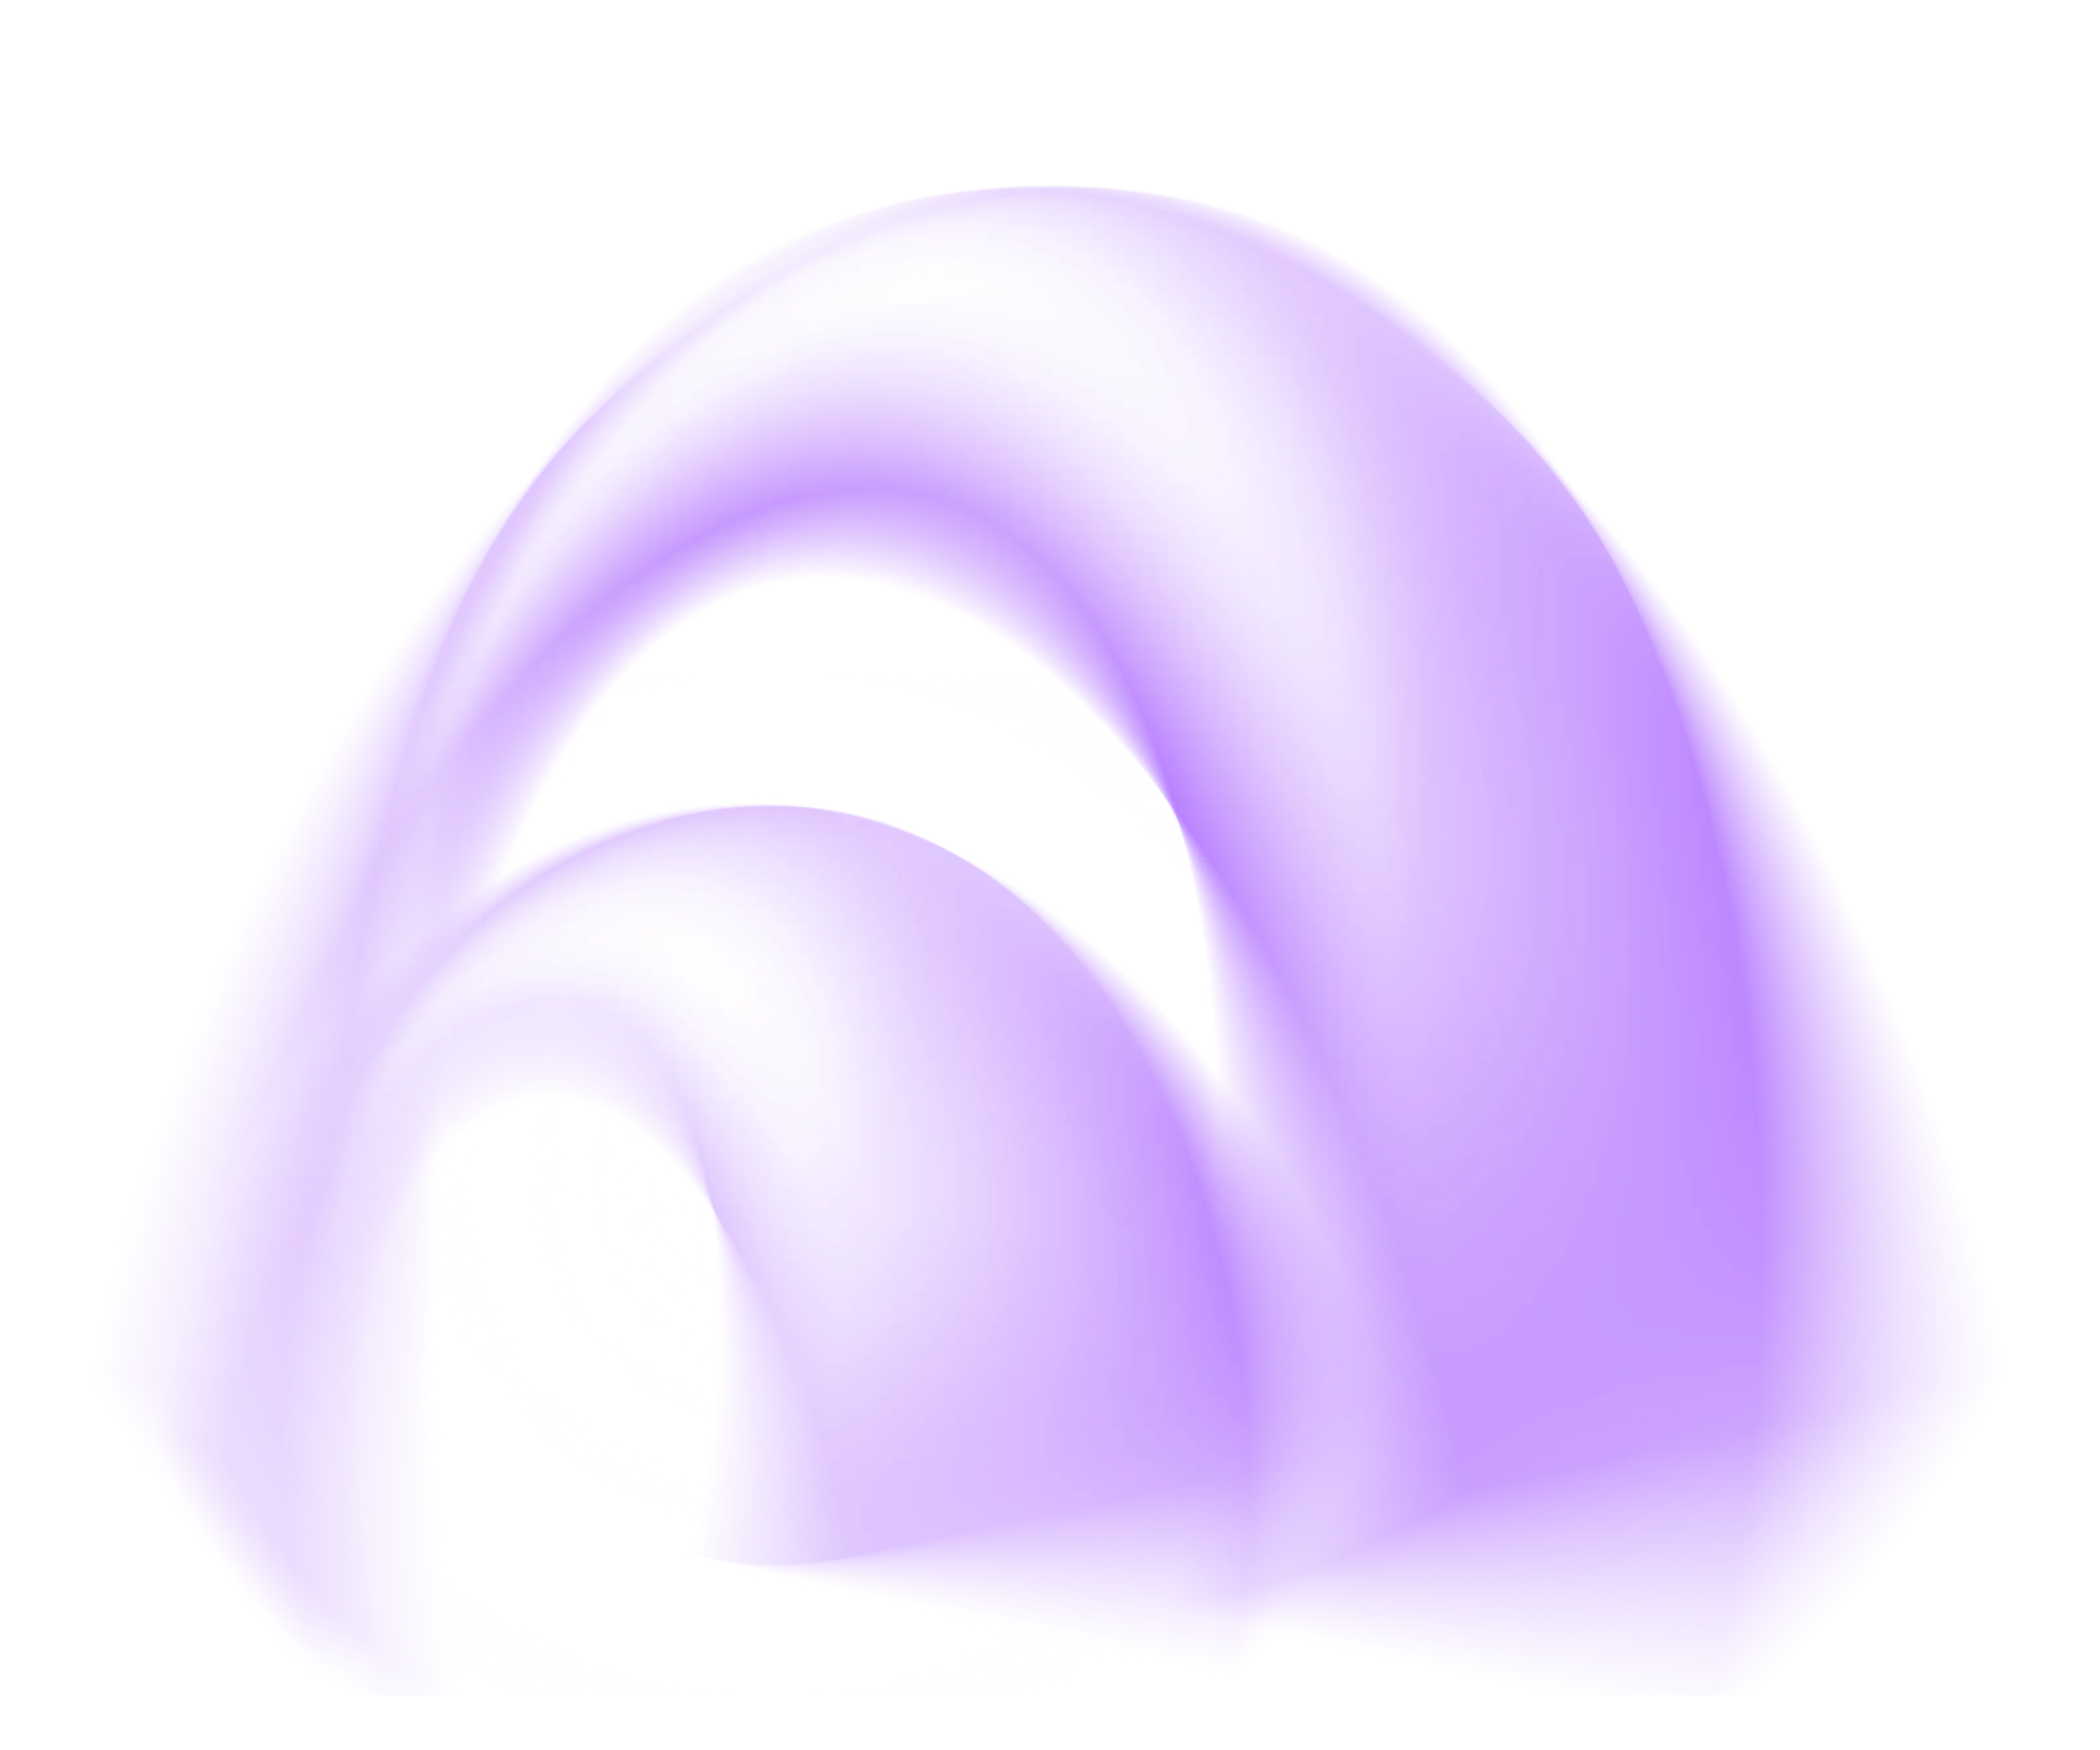 Thick purple arc lines